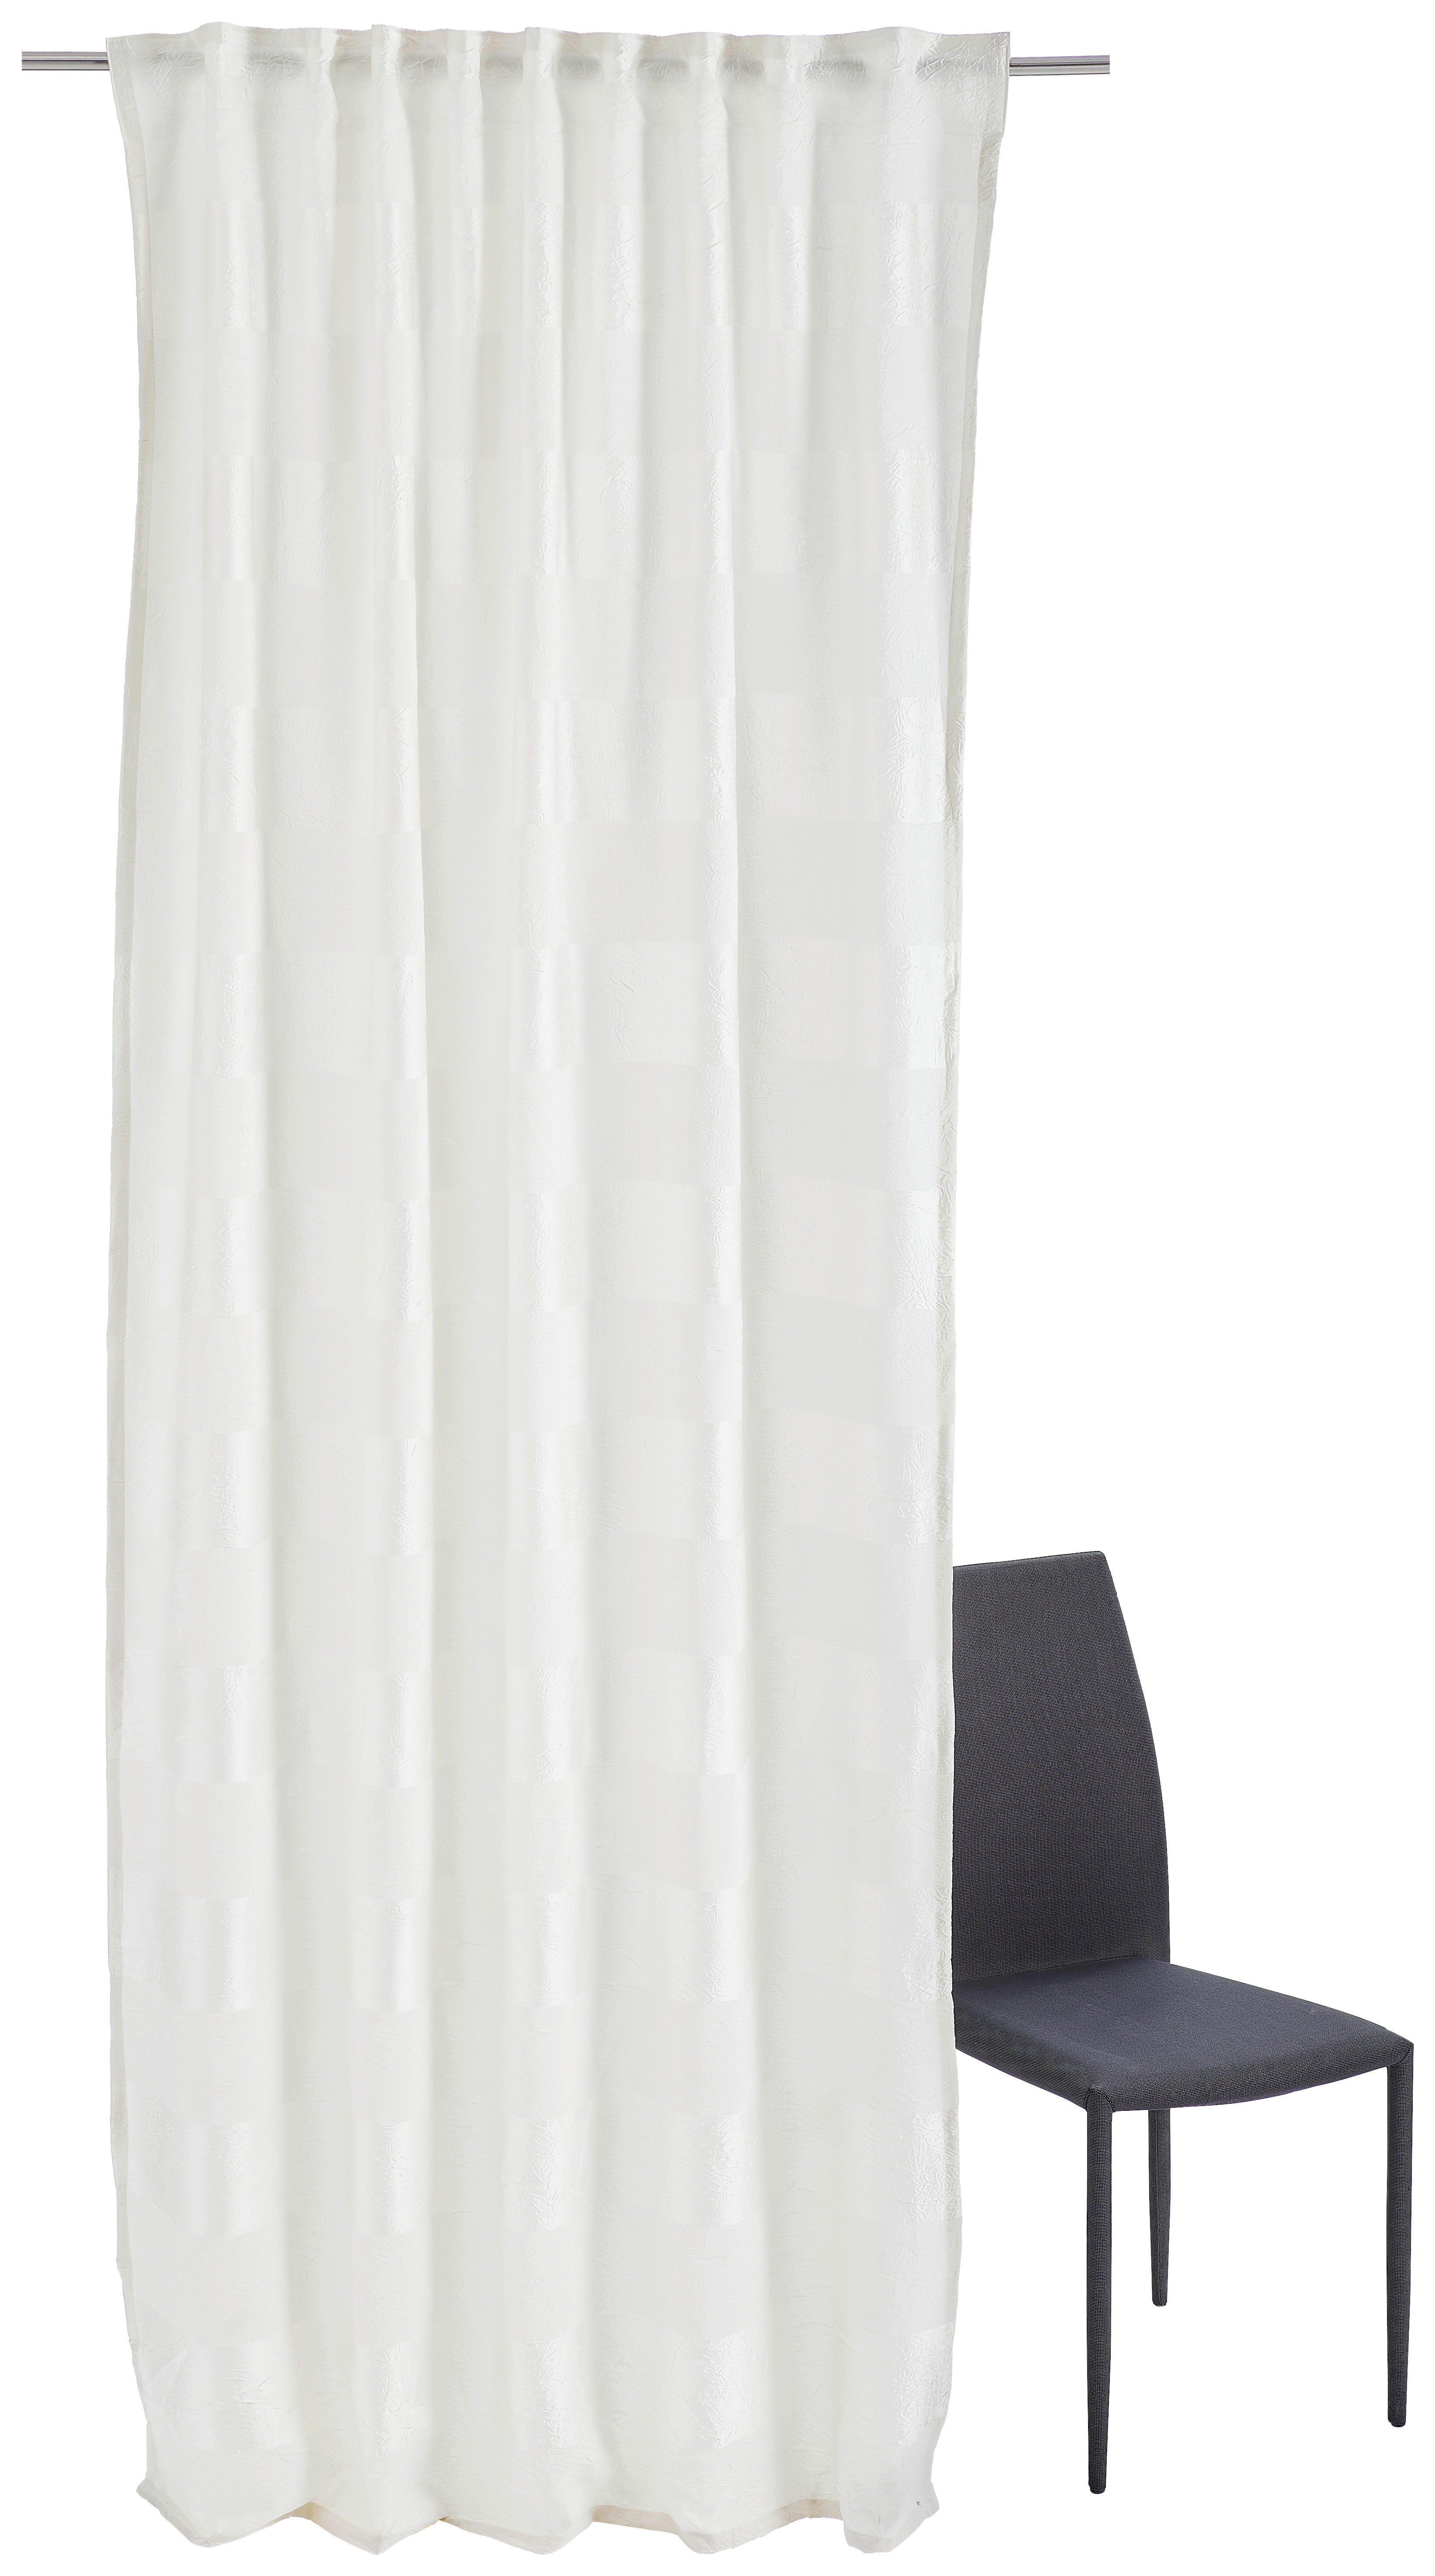 FERTIGVORHANG GISBORNE blickdicht 135/245 cm   - Weiß, Basics, Textil (135/245cm) - Esposa